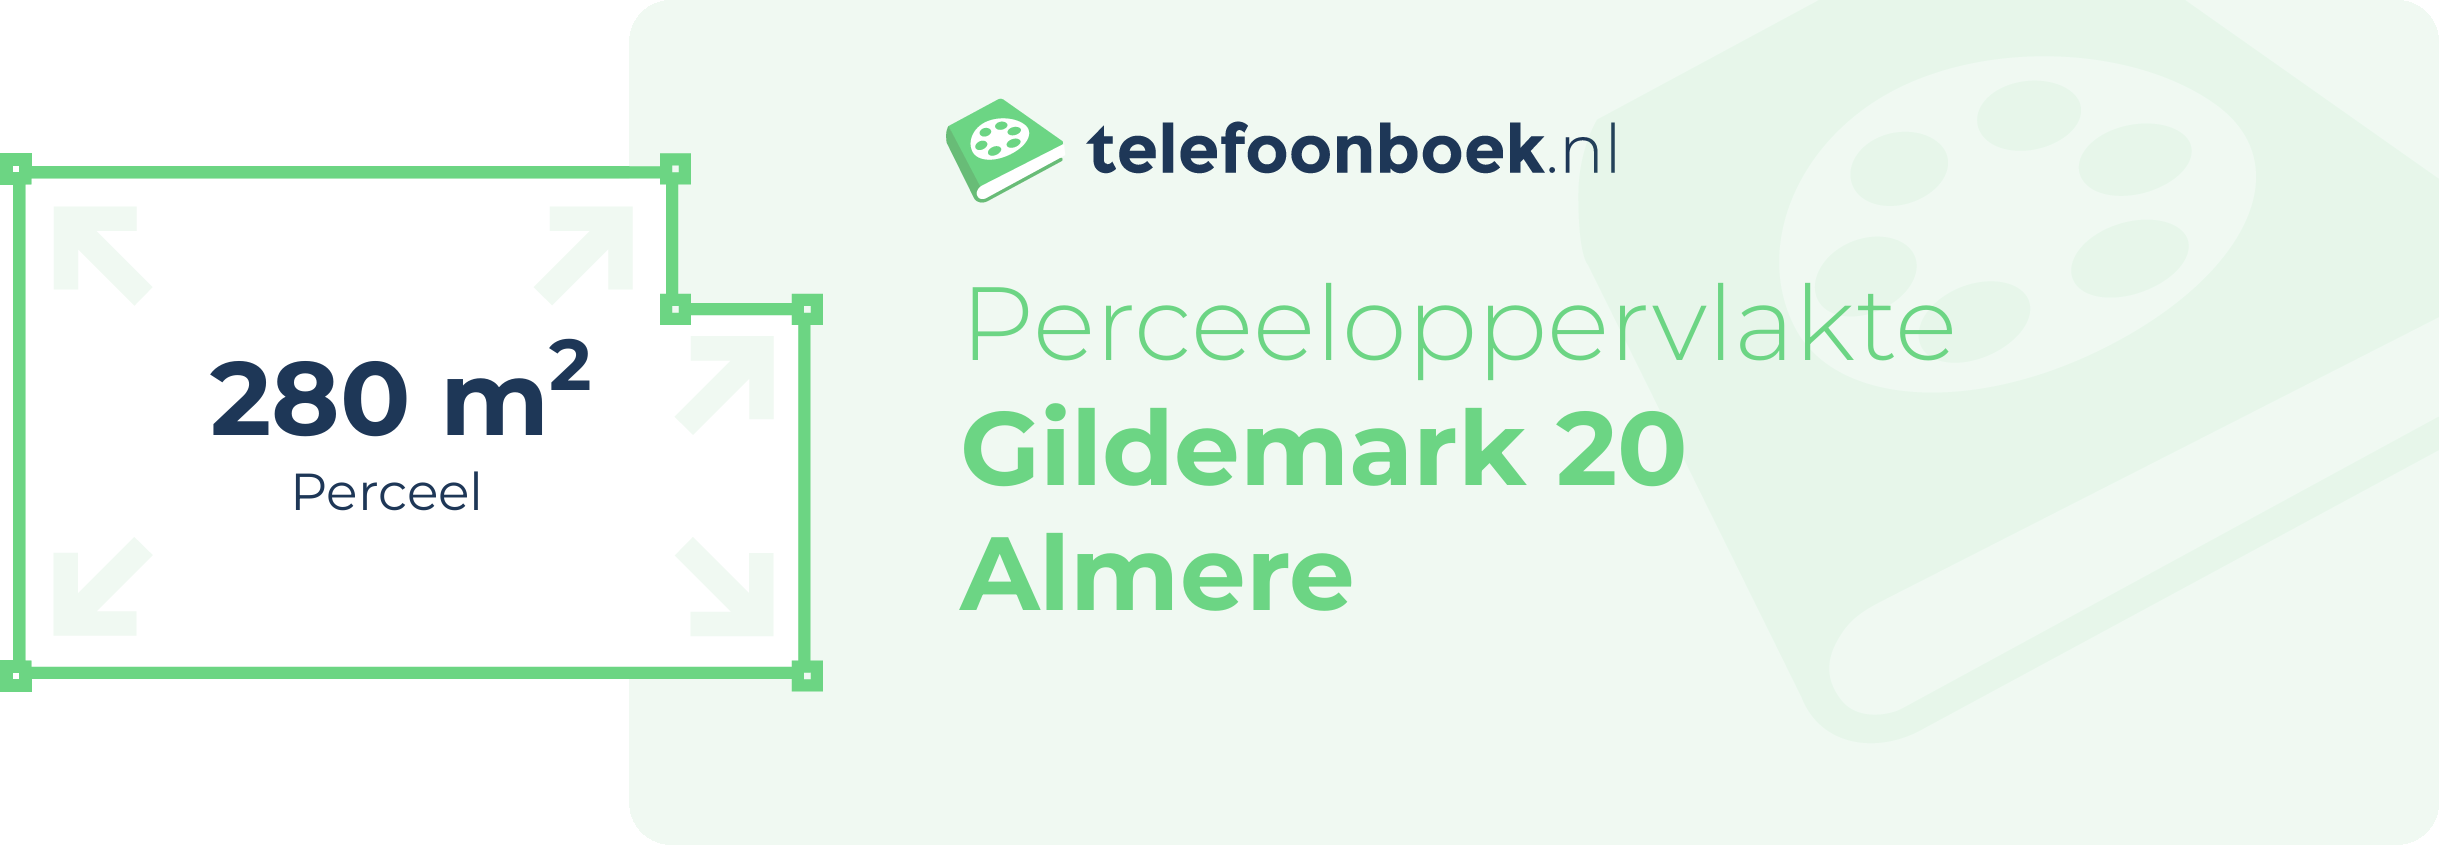 Perceeloppervlakte Gildemark 20 Almere